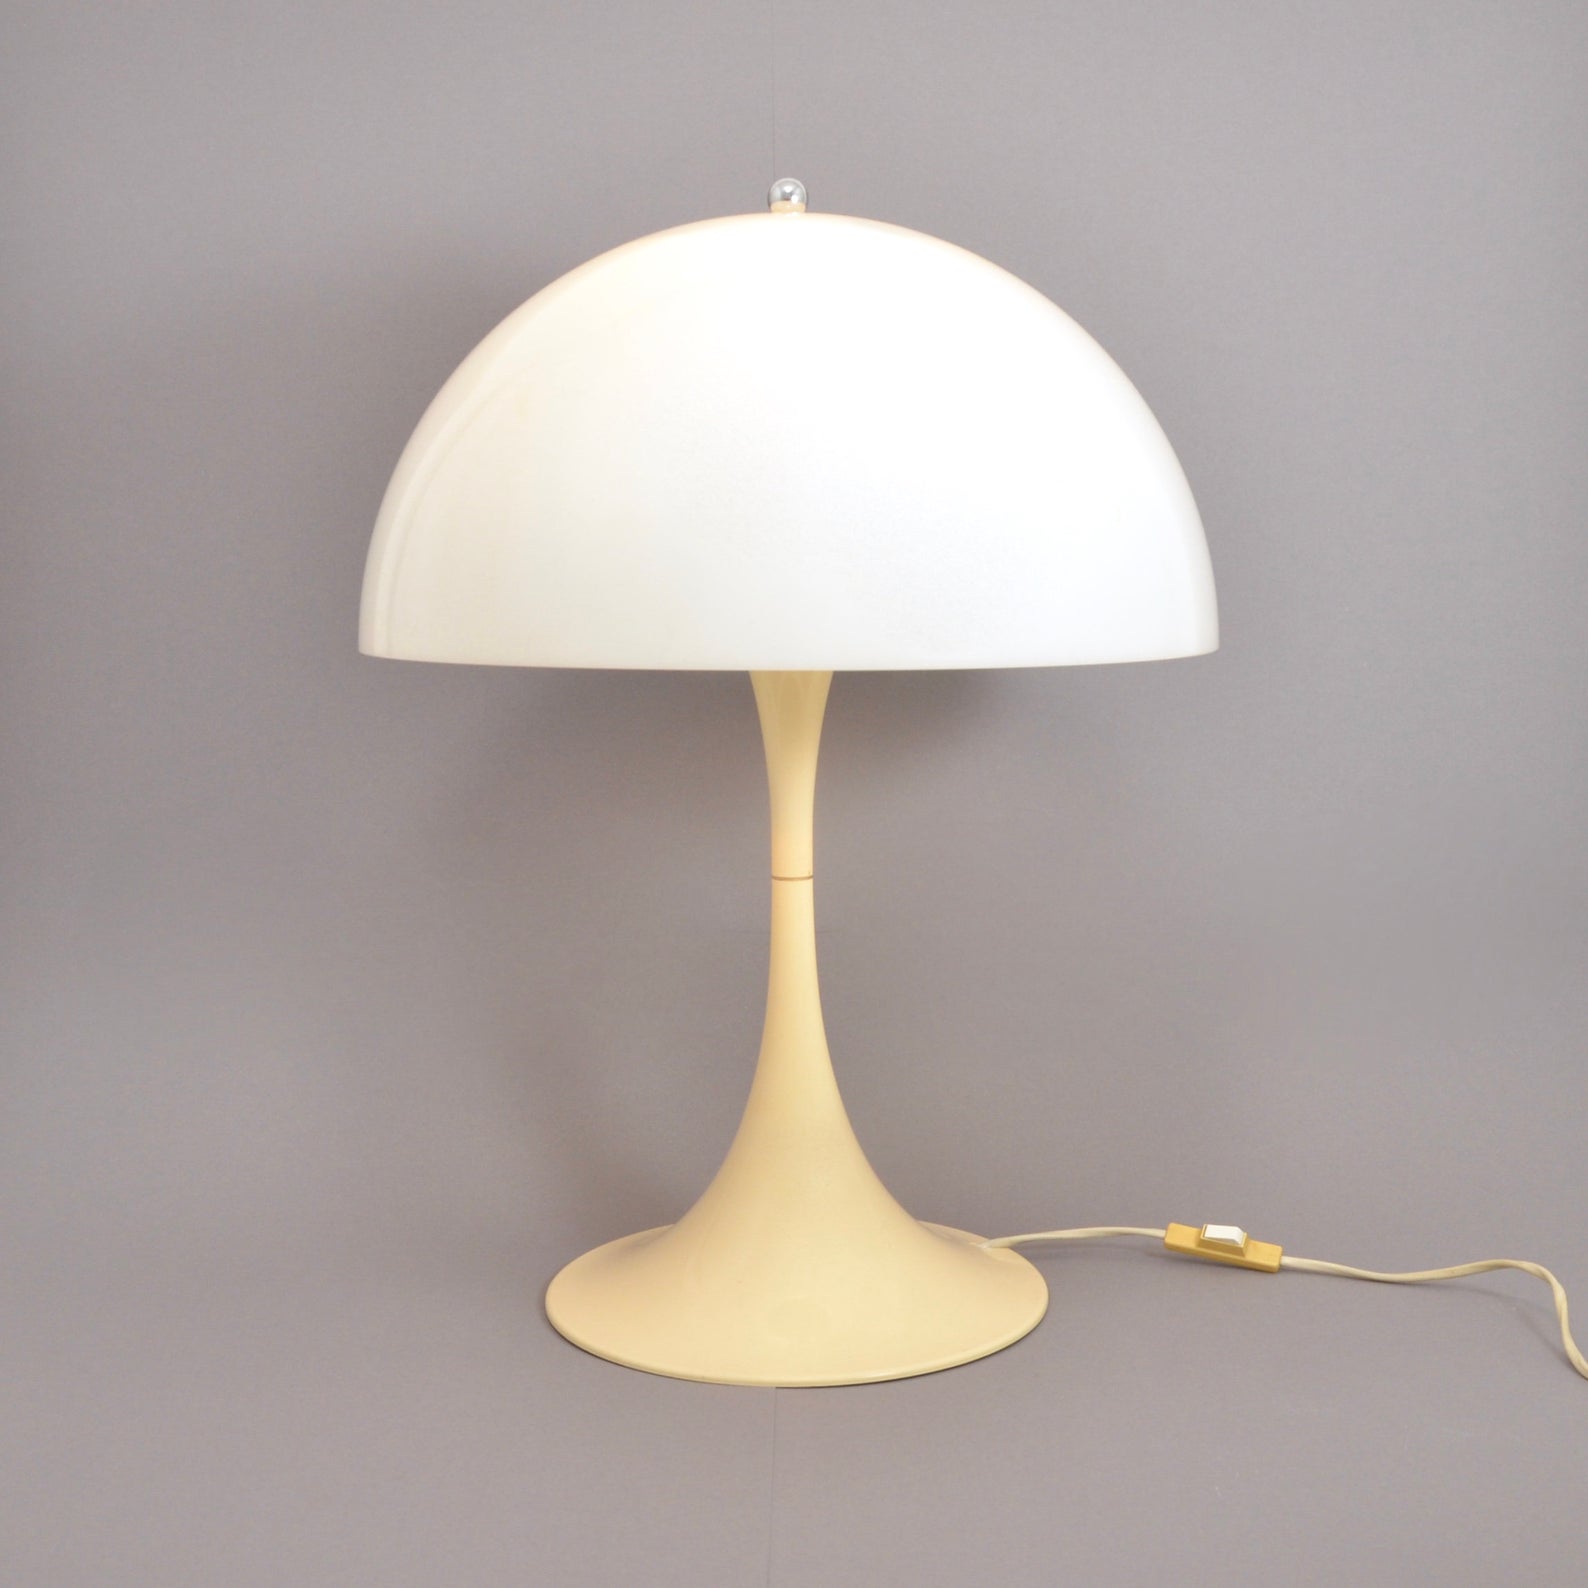 Panthella Table Lamp White Shade Designed by Verner Panton